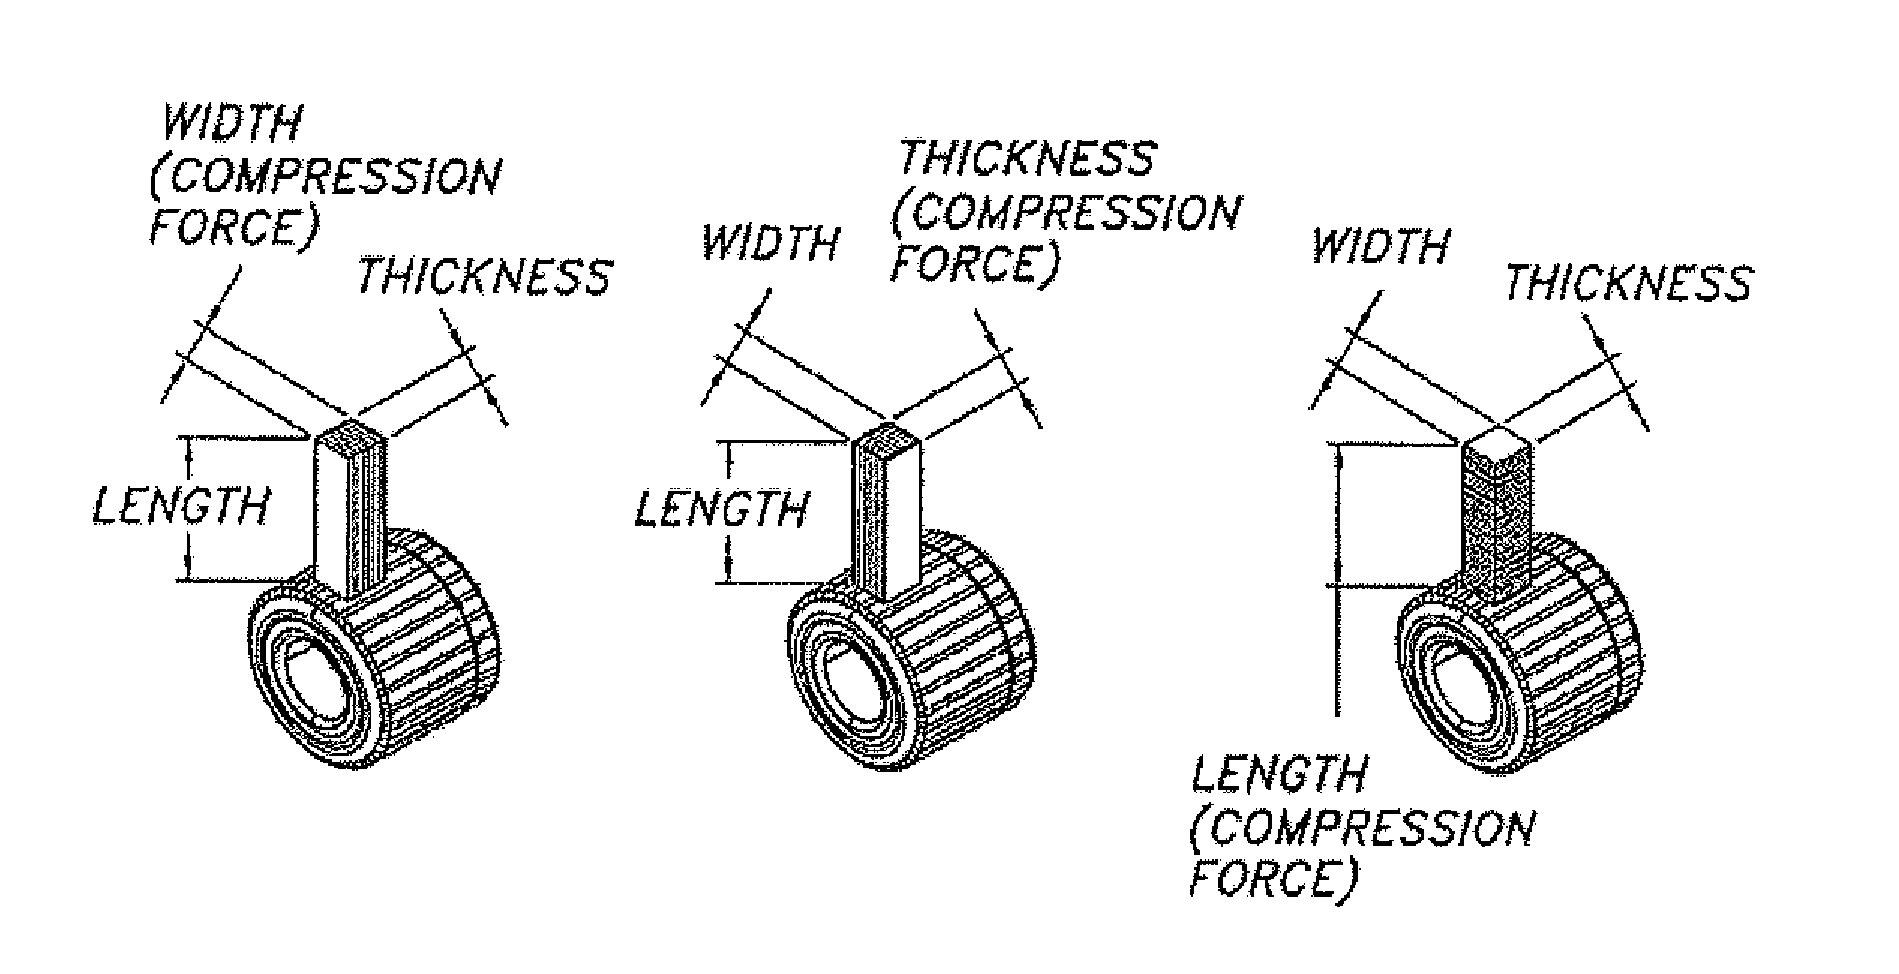 Grain orientation control through hot pressing techniques